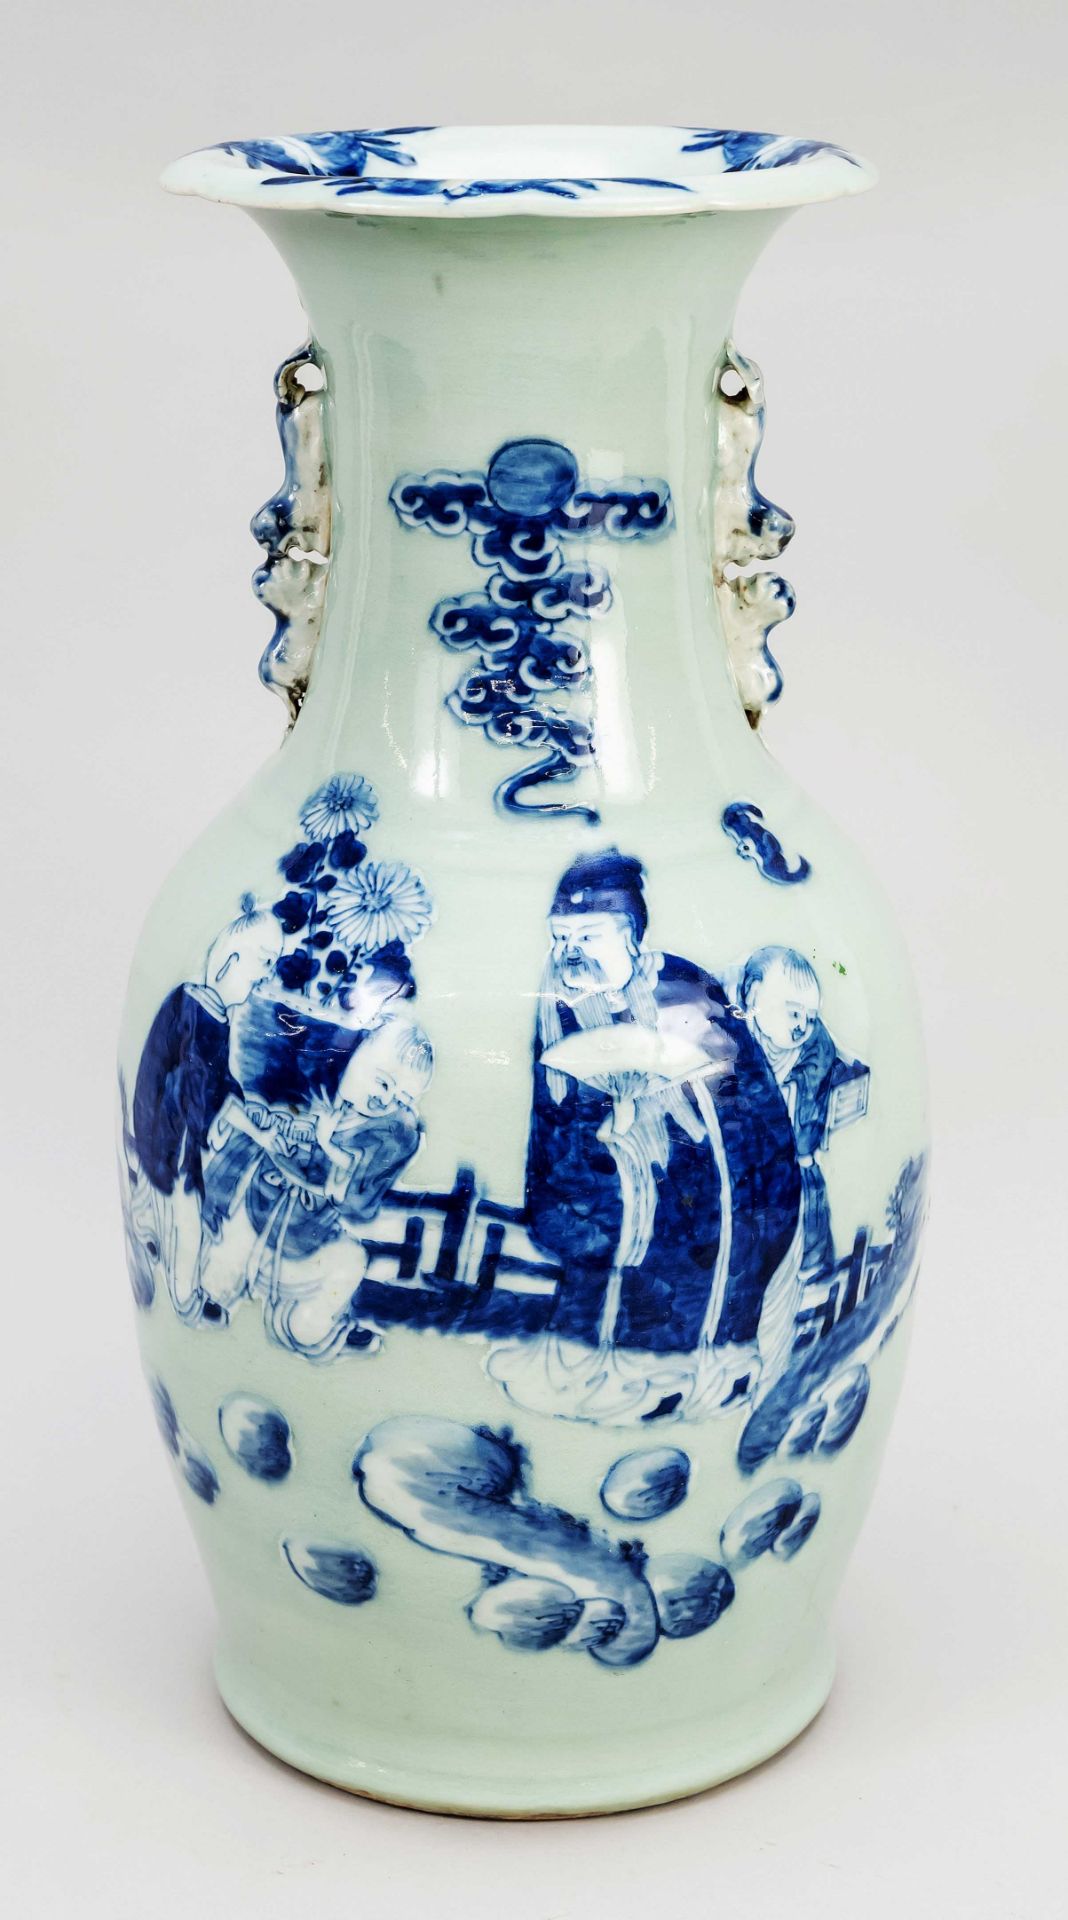 Large Hu vase celadon, China, Republic period(1912-1949), celadon glazed porcelain with cobalt